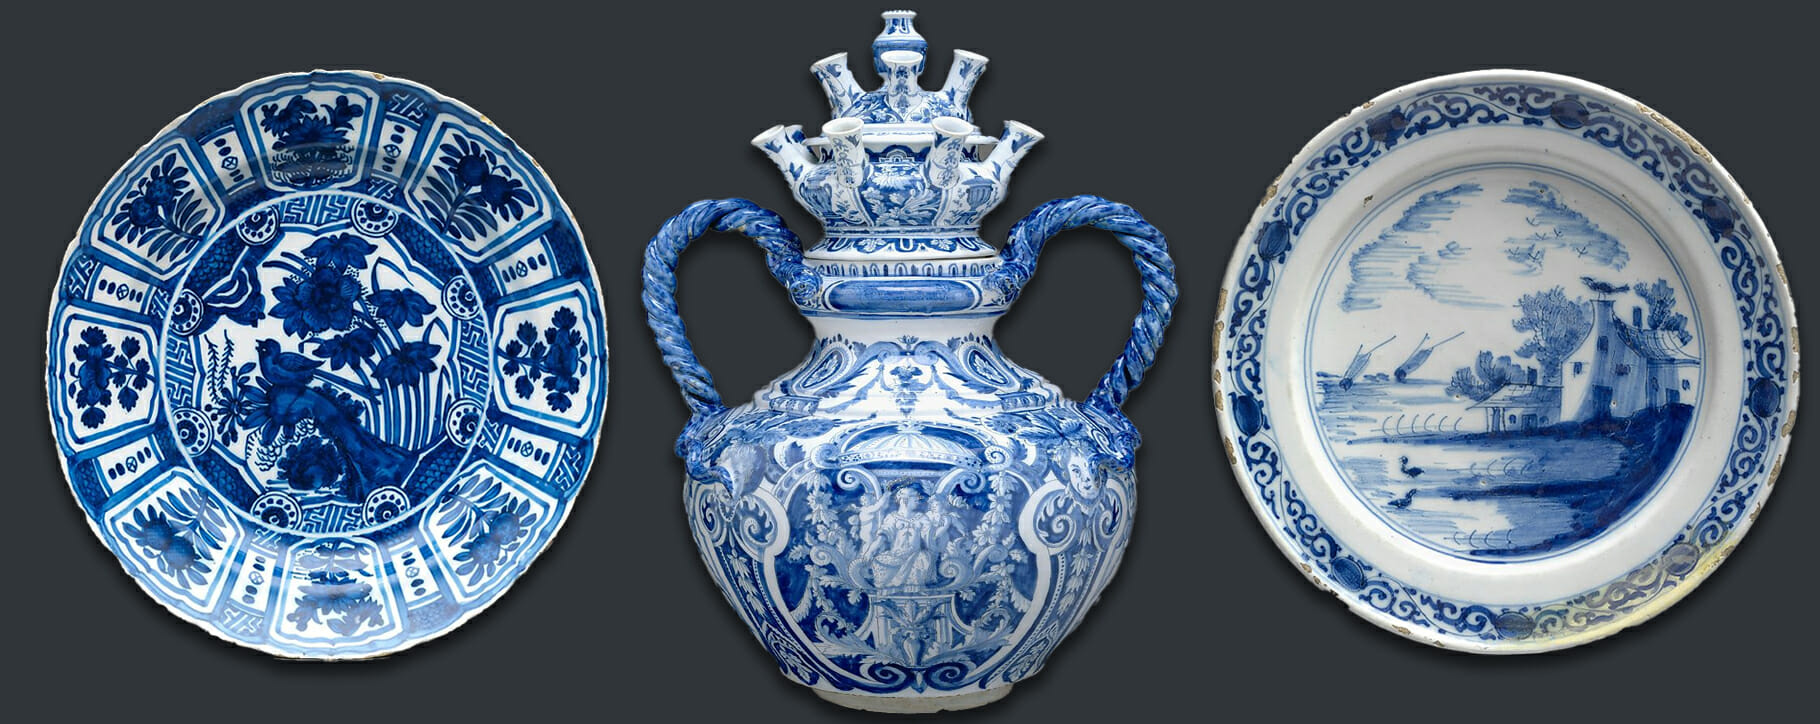 Delftware examples